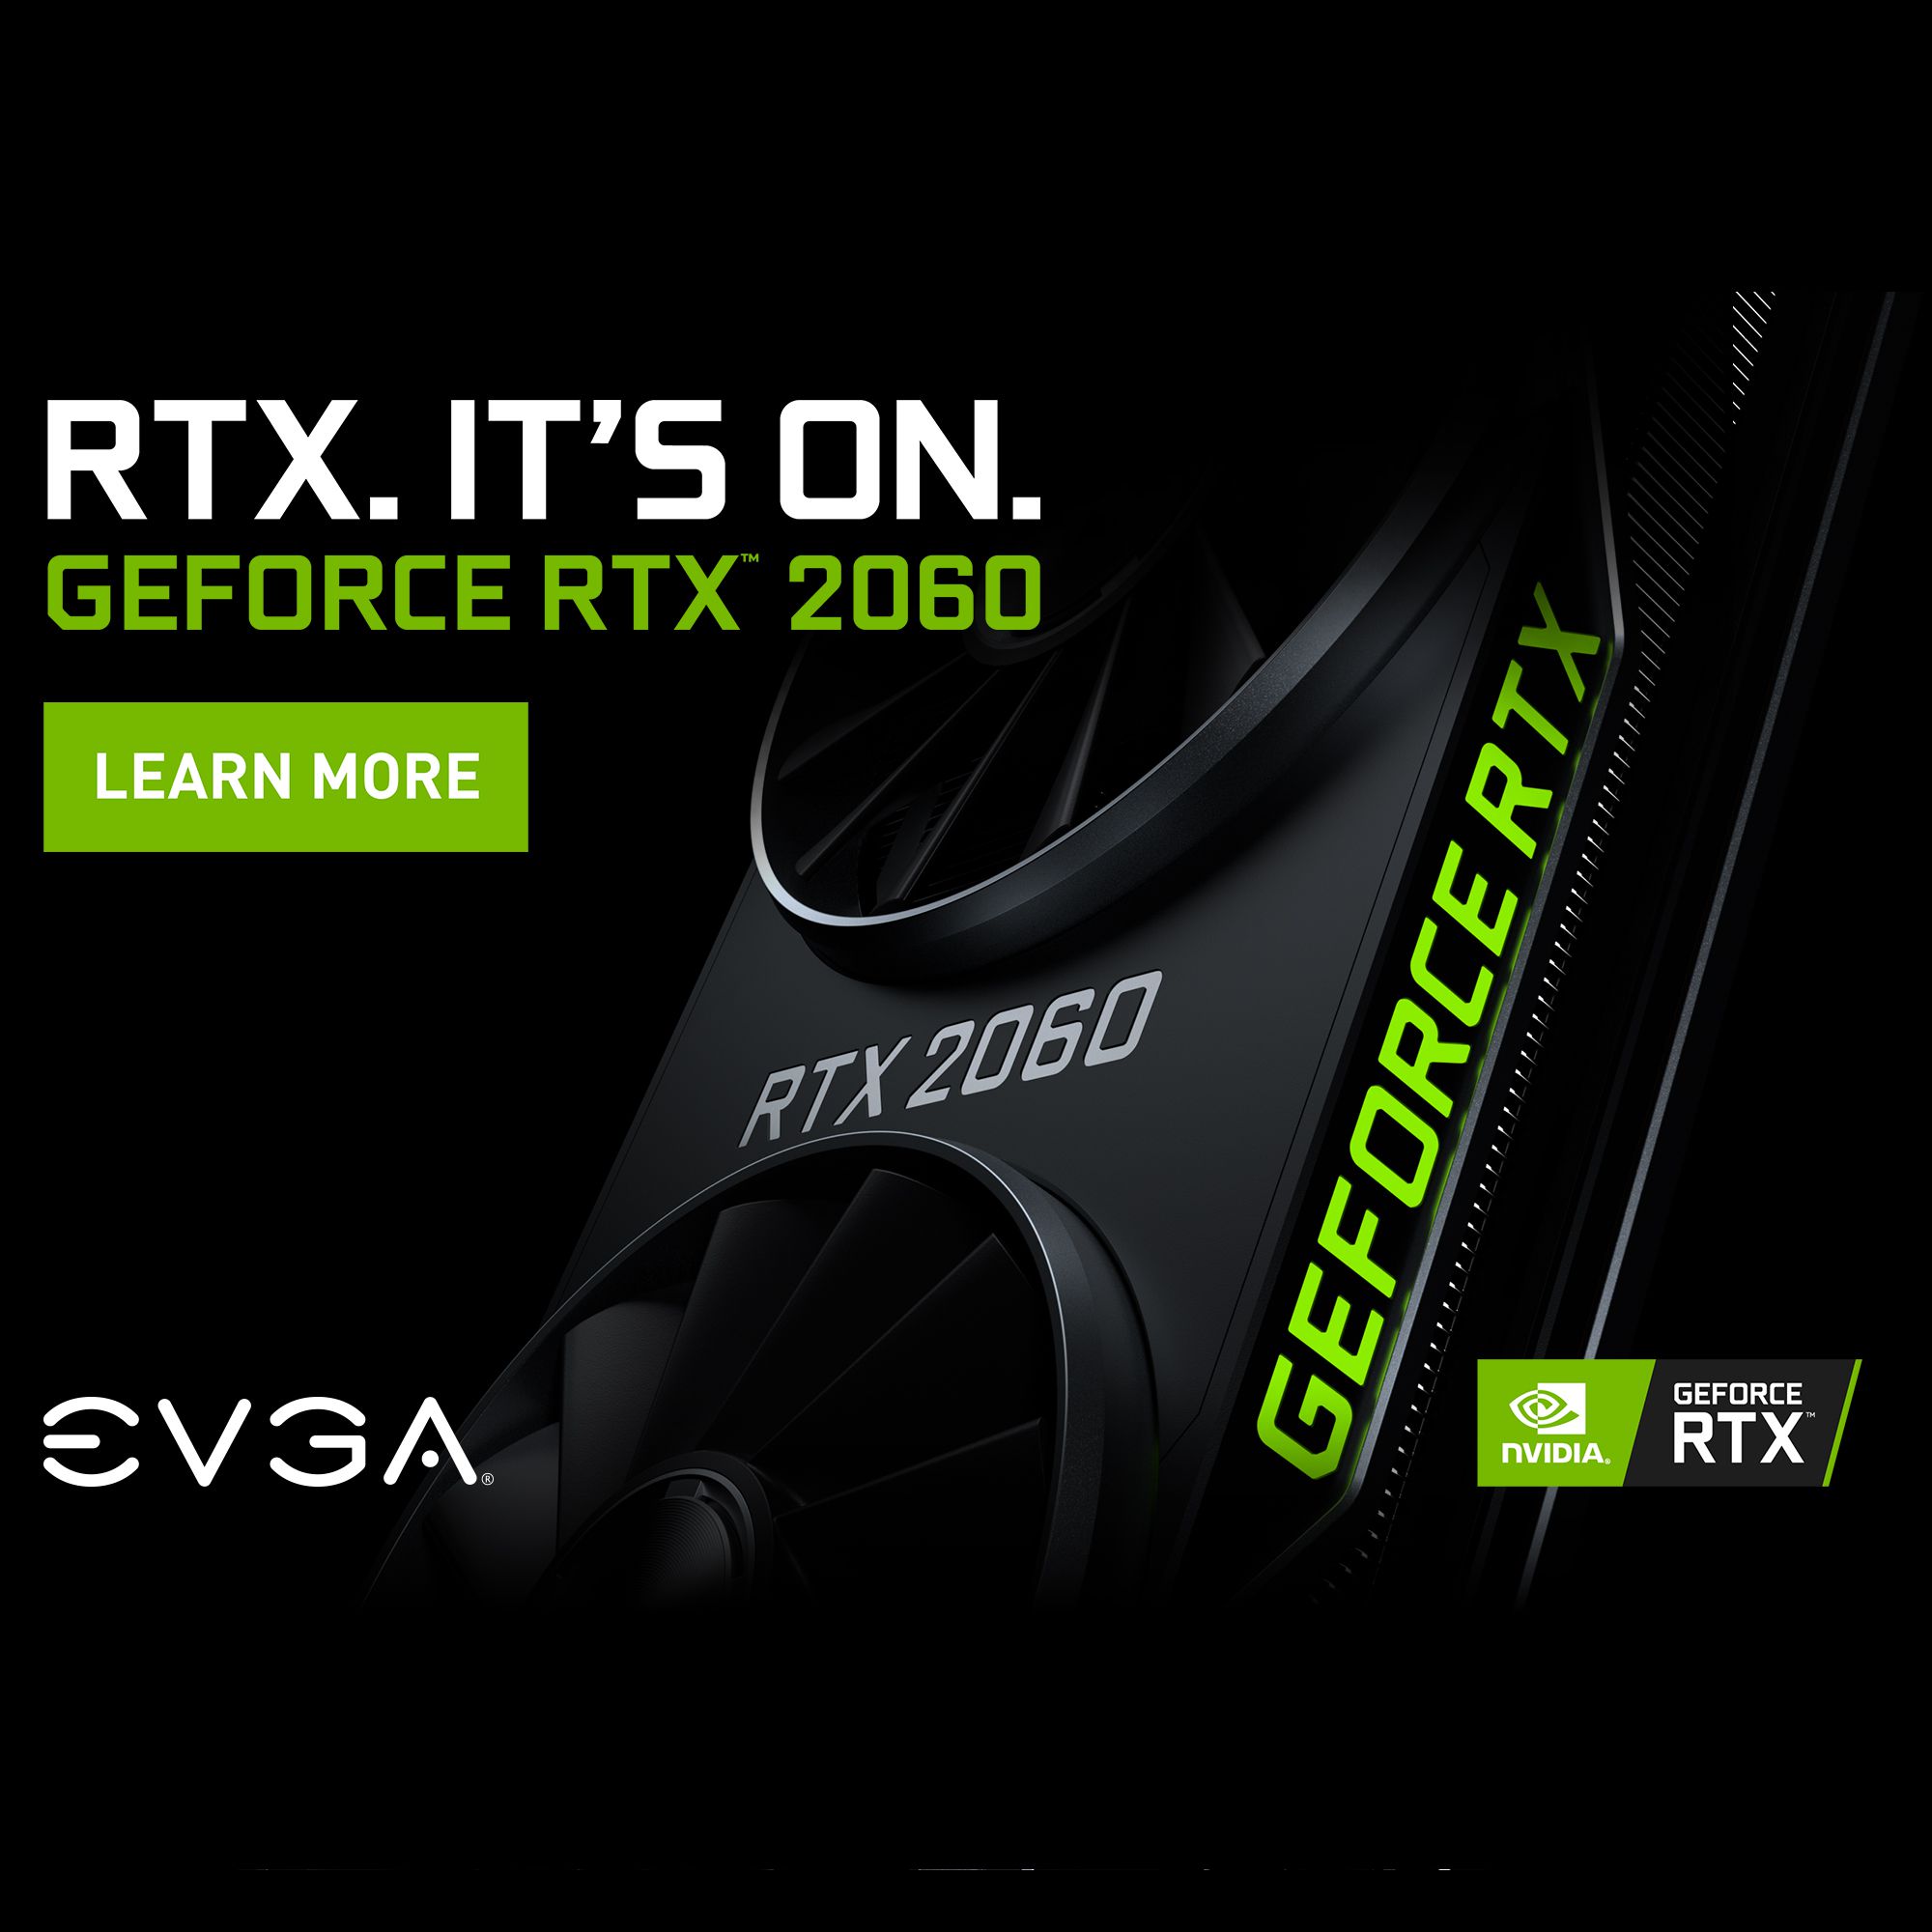 EVGA - Articles - EVGA GeForce RTX 2060